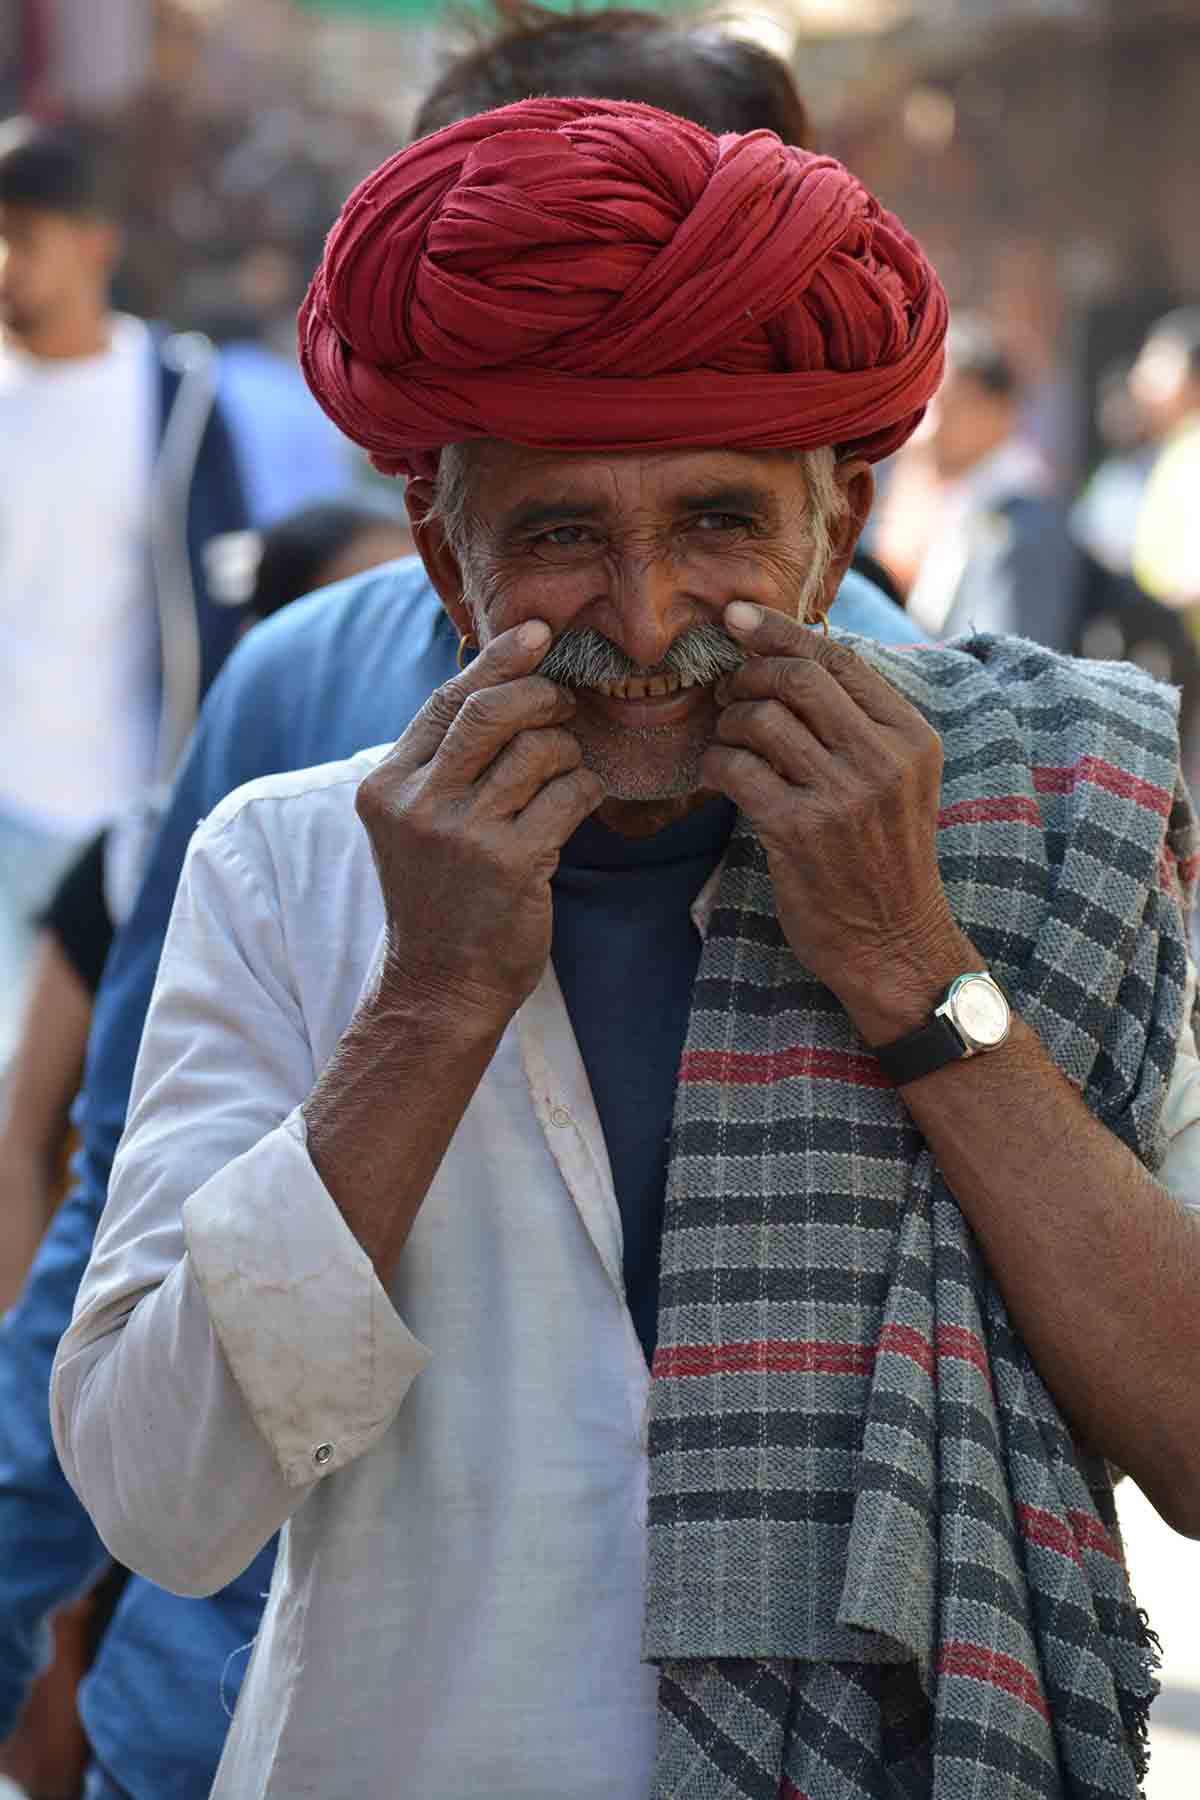 A happy Rajasthani man clad in traditional kurta- dhoti & bright coloured turban reflecting Rajasthani costume.